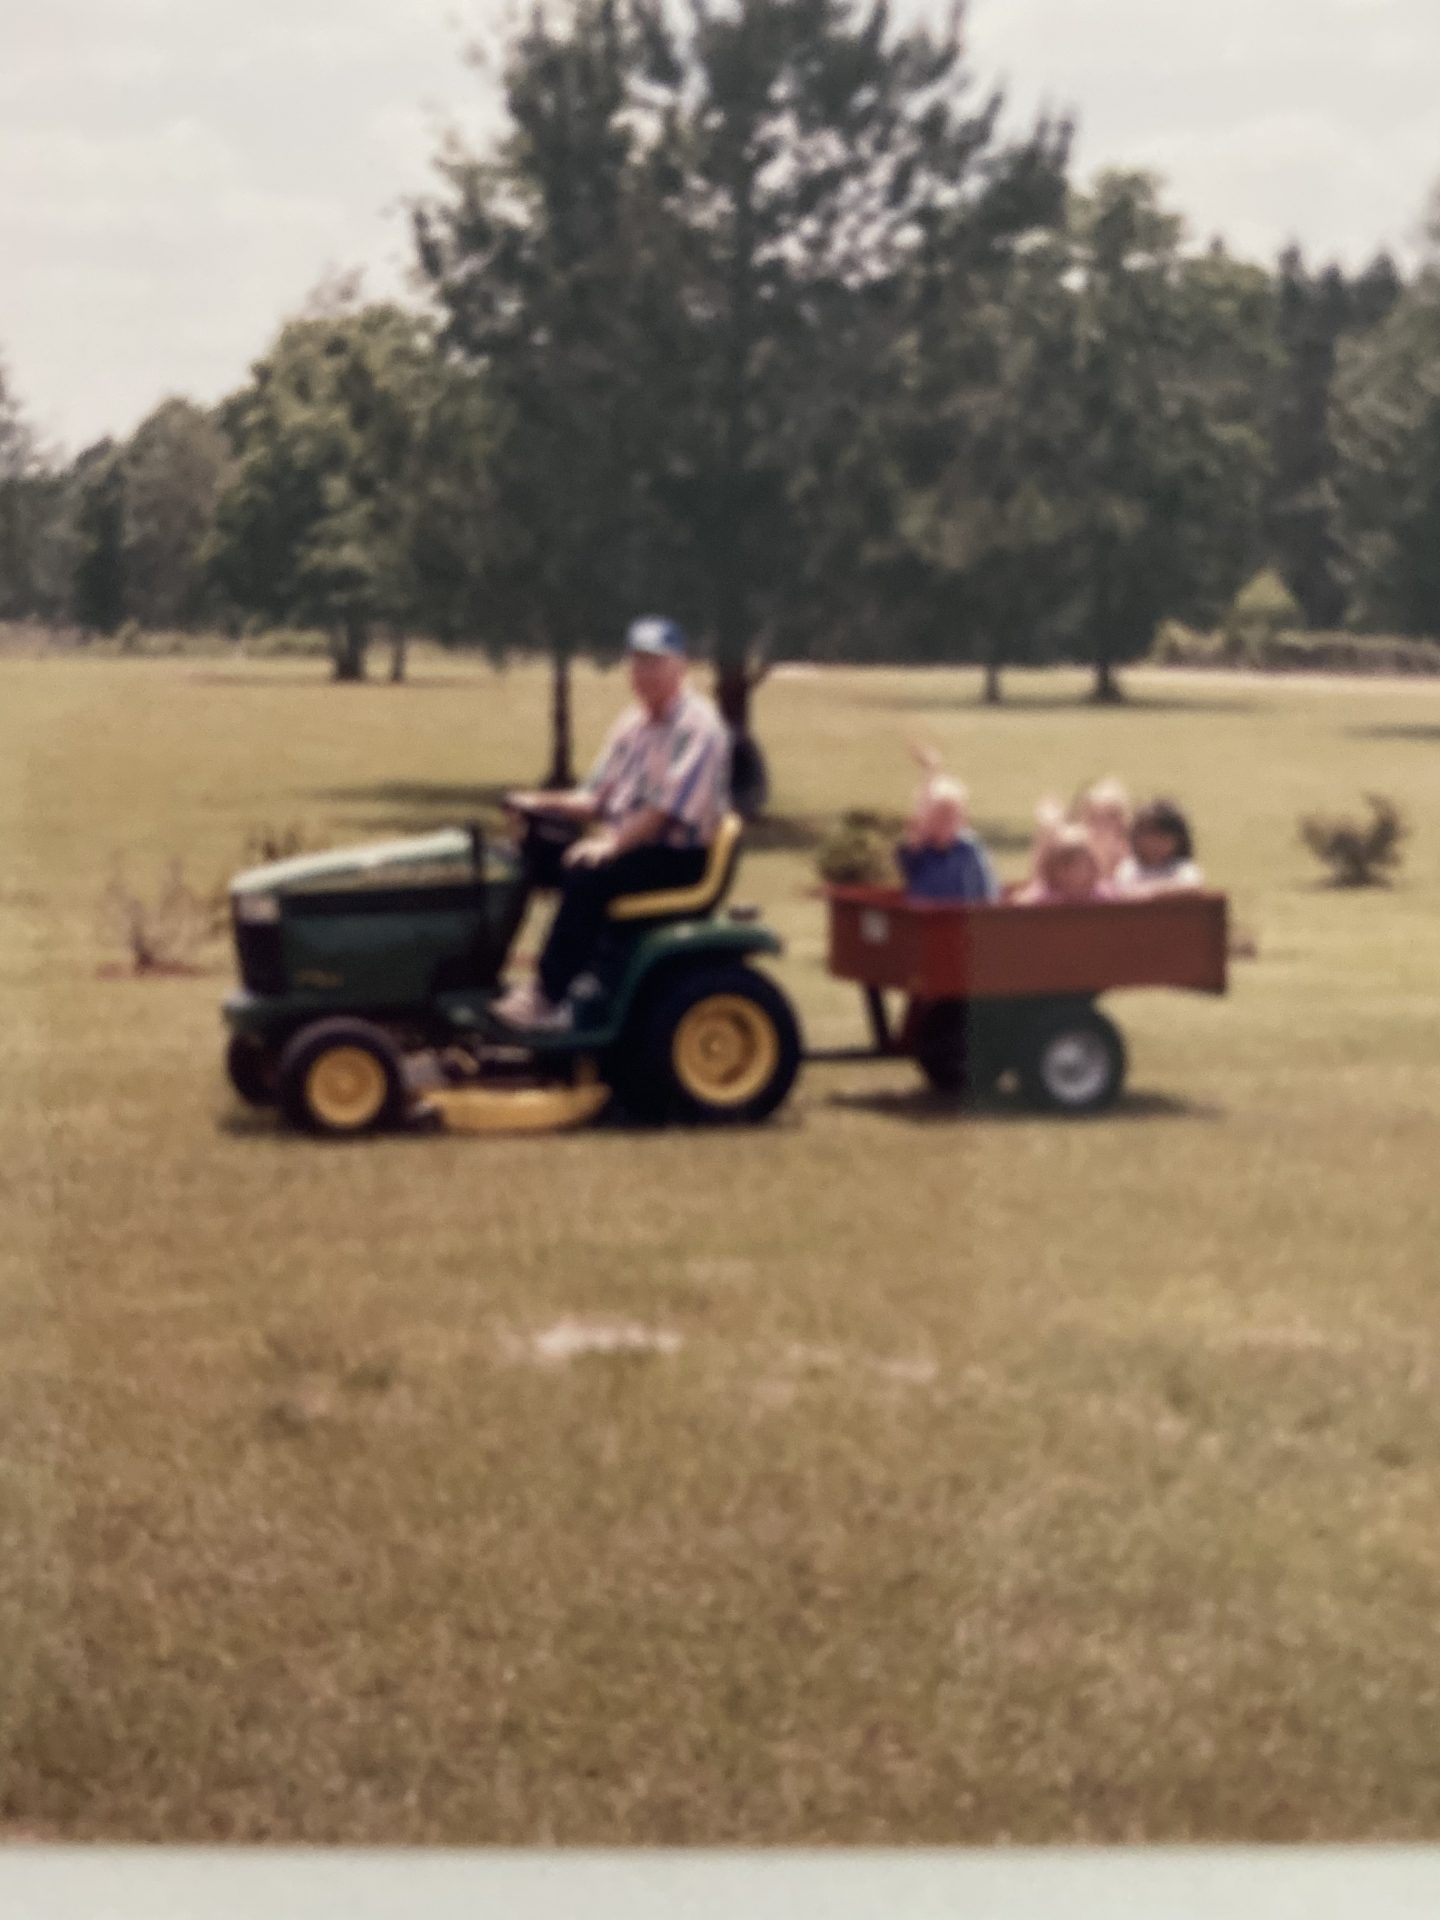 His John Deere taking grandkids for a ride